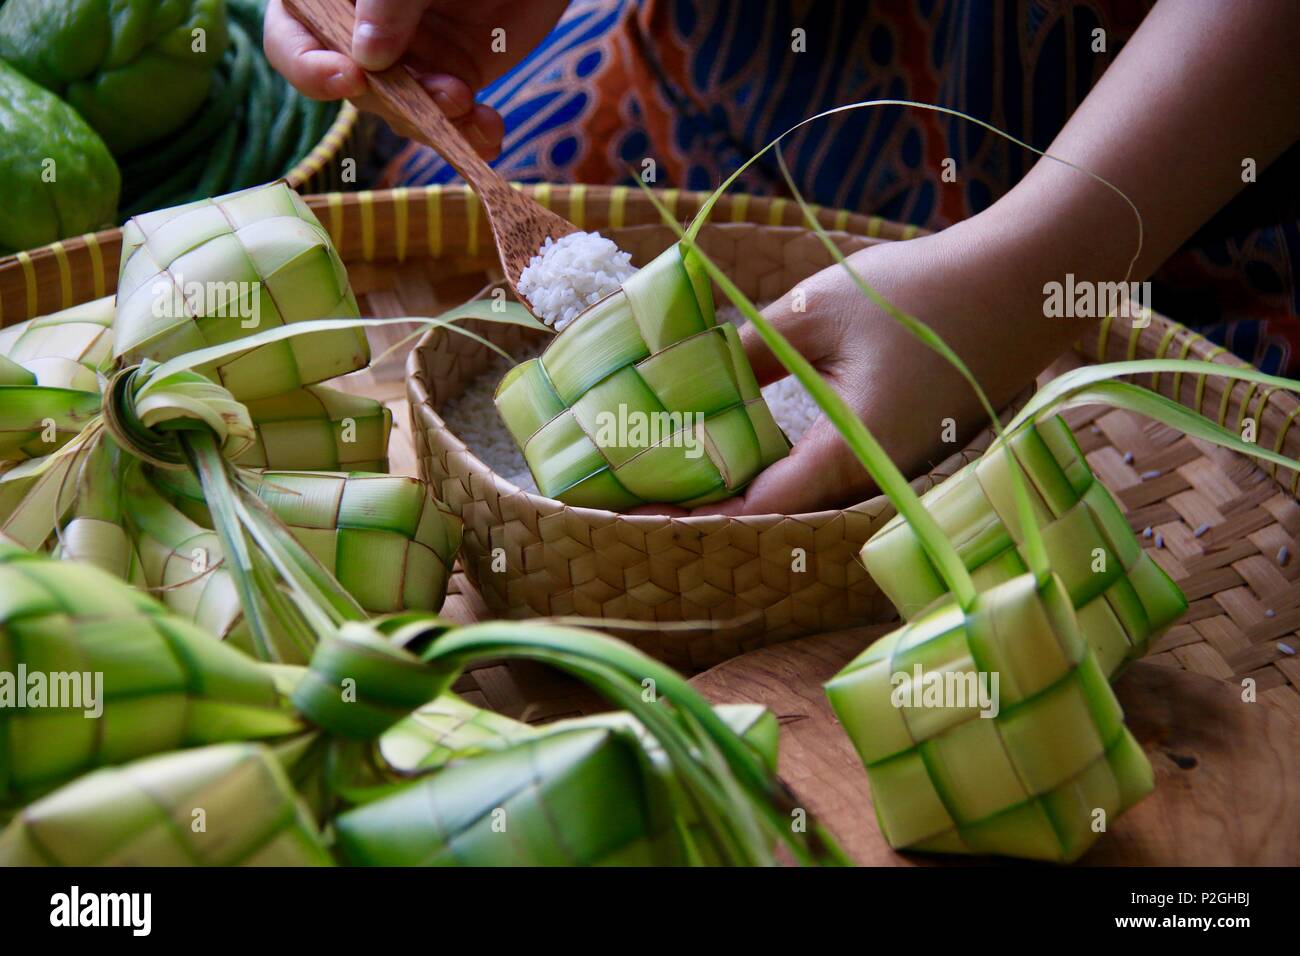 How to make ketupat